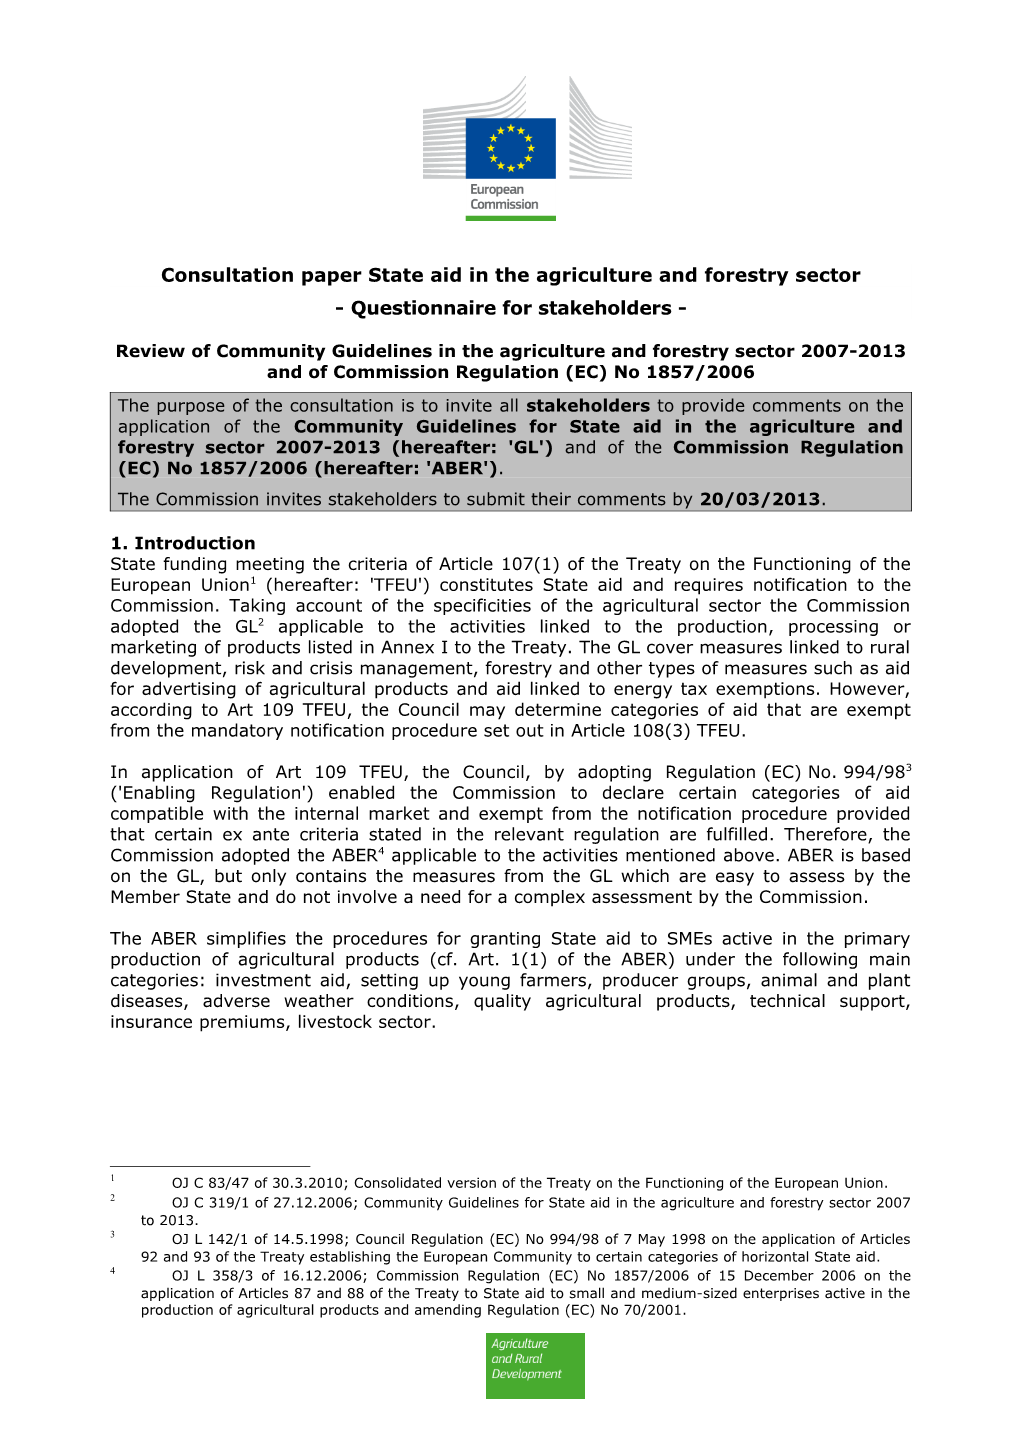 The General Block Exemption Regulation - Consultation Paper